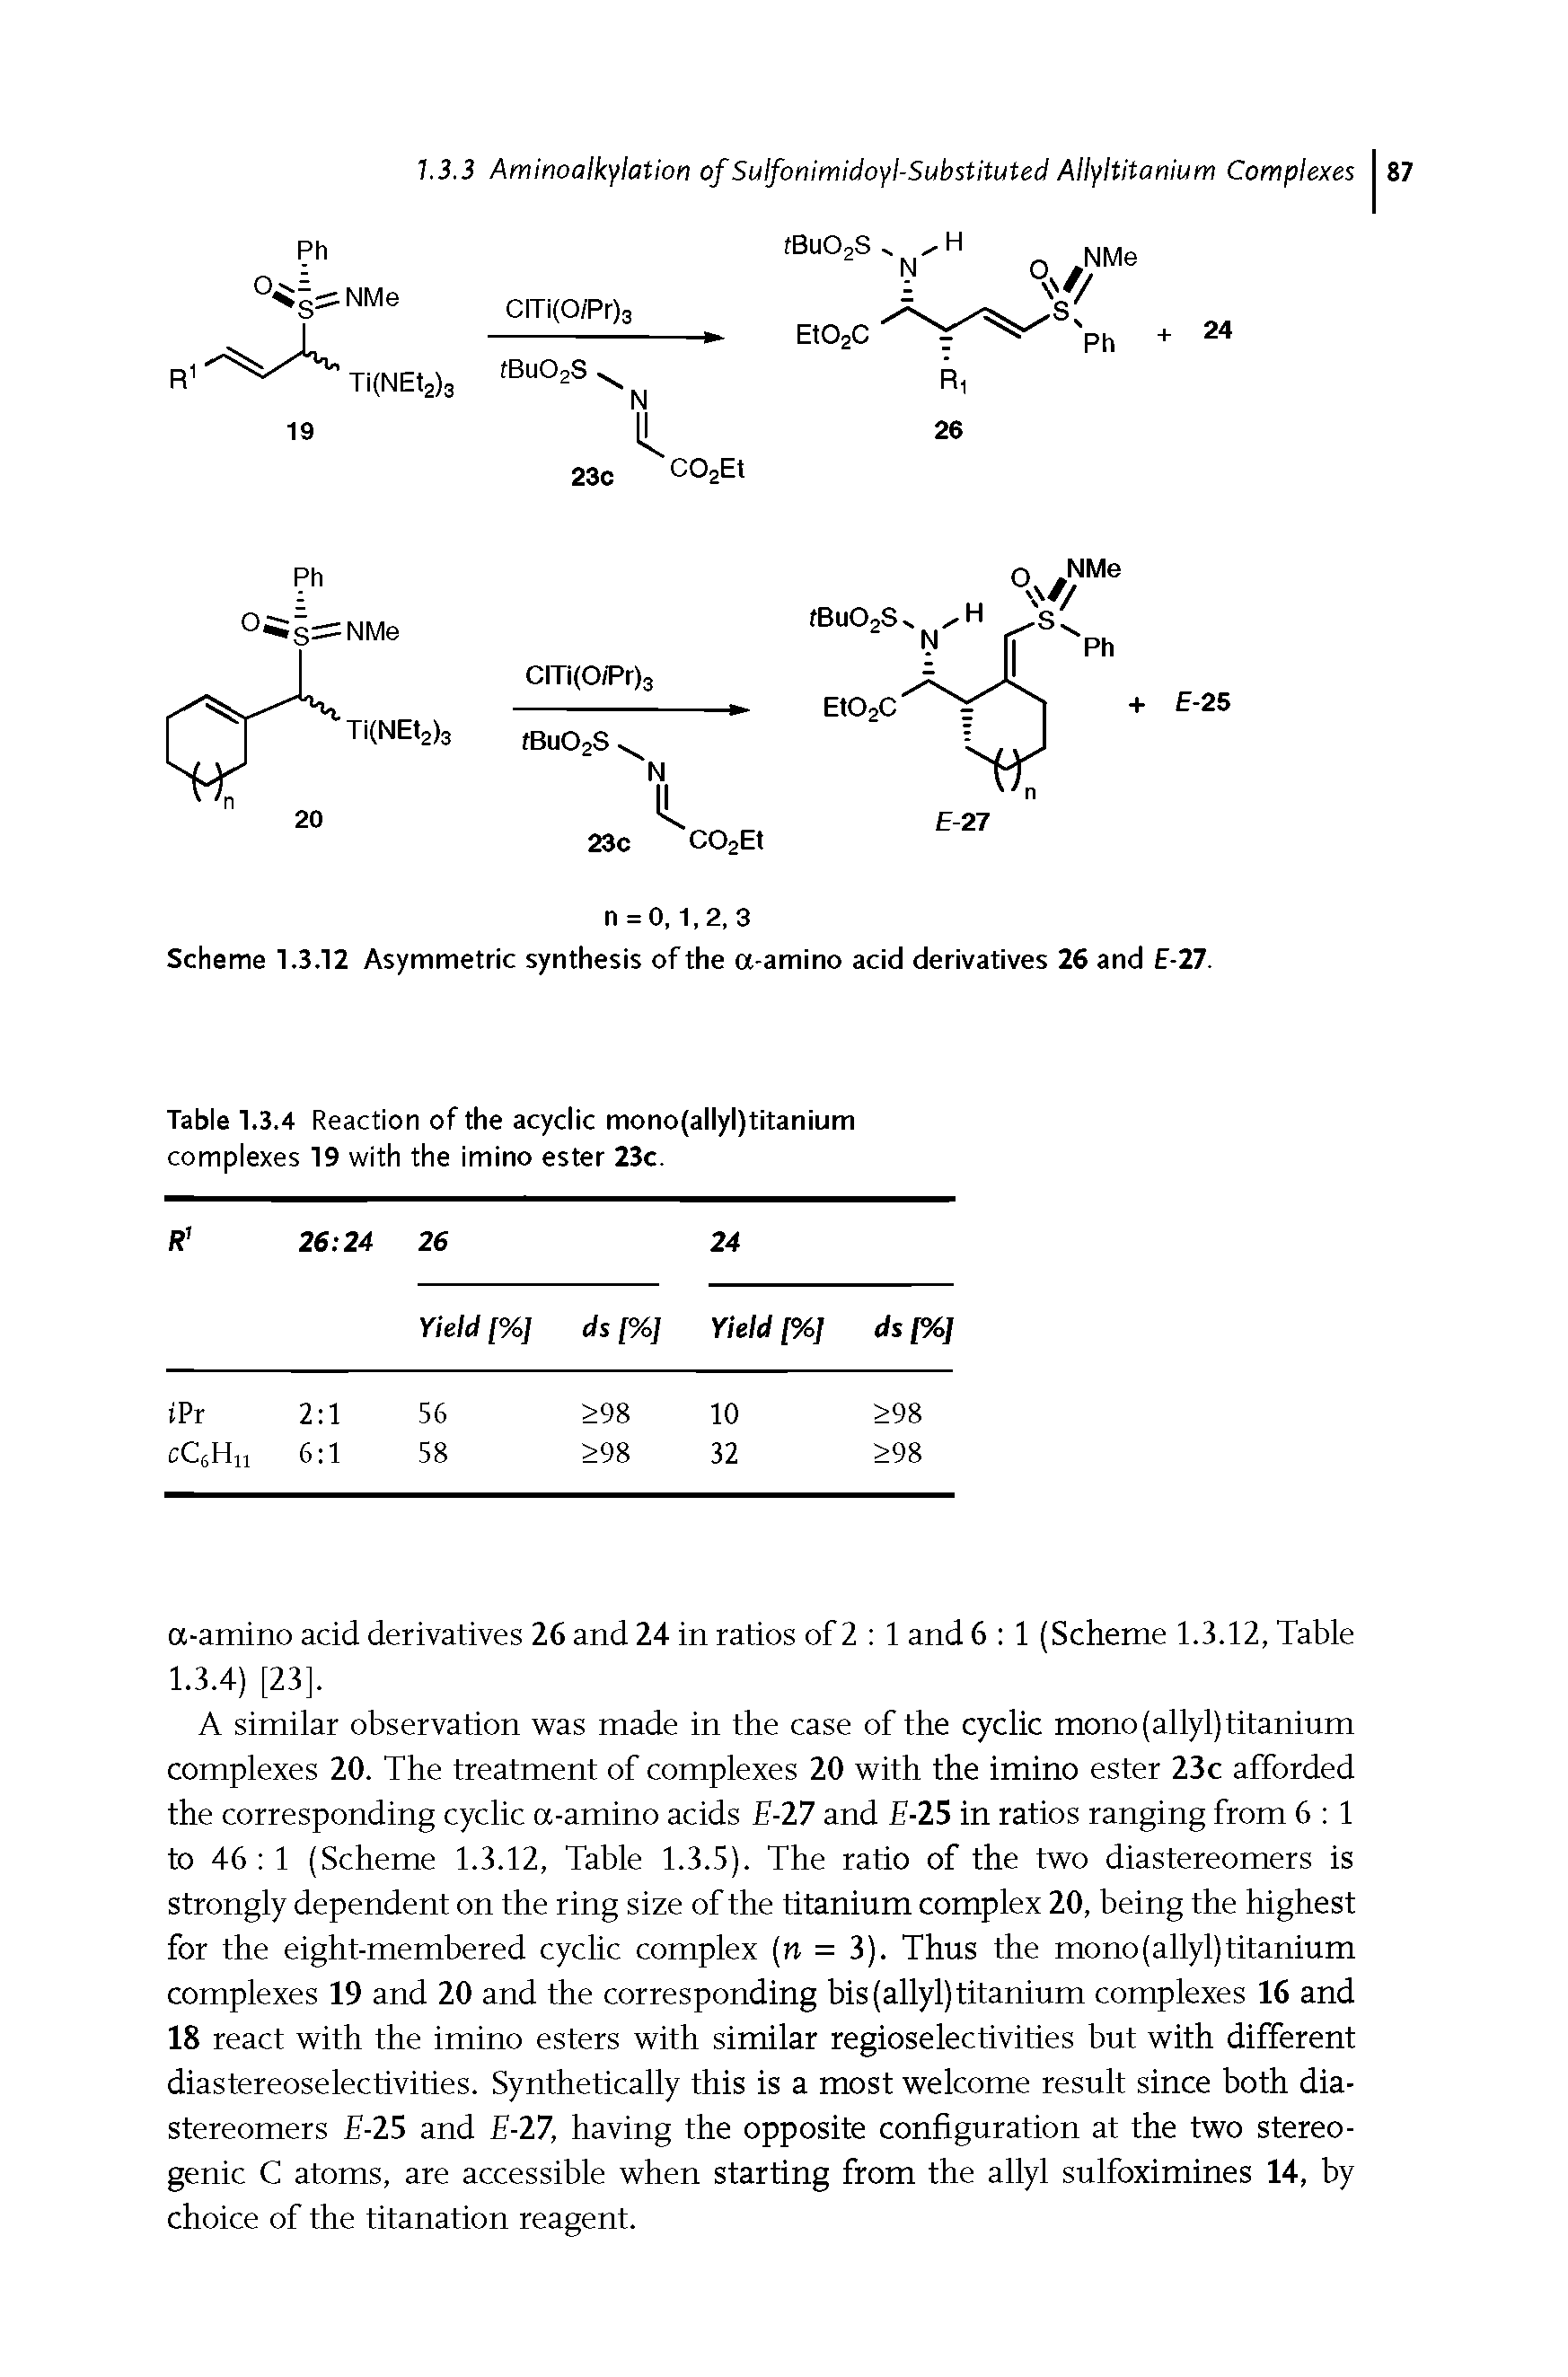 Table 1.3.4 Reaction of the acyclic mono(allyl)titanium complexes 19 with the imino ester 23c.